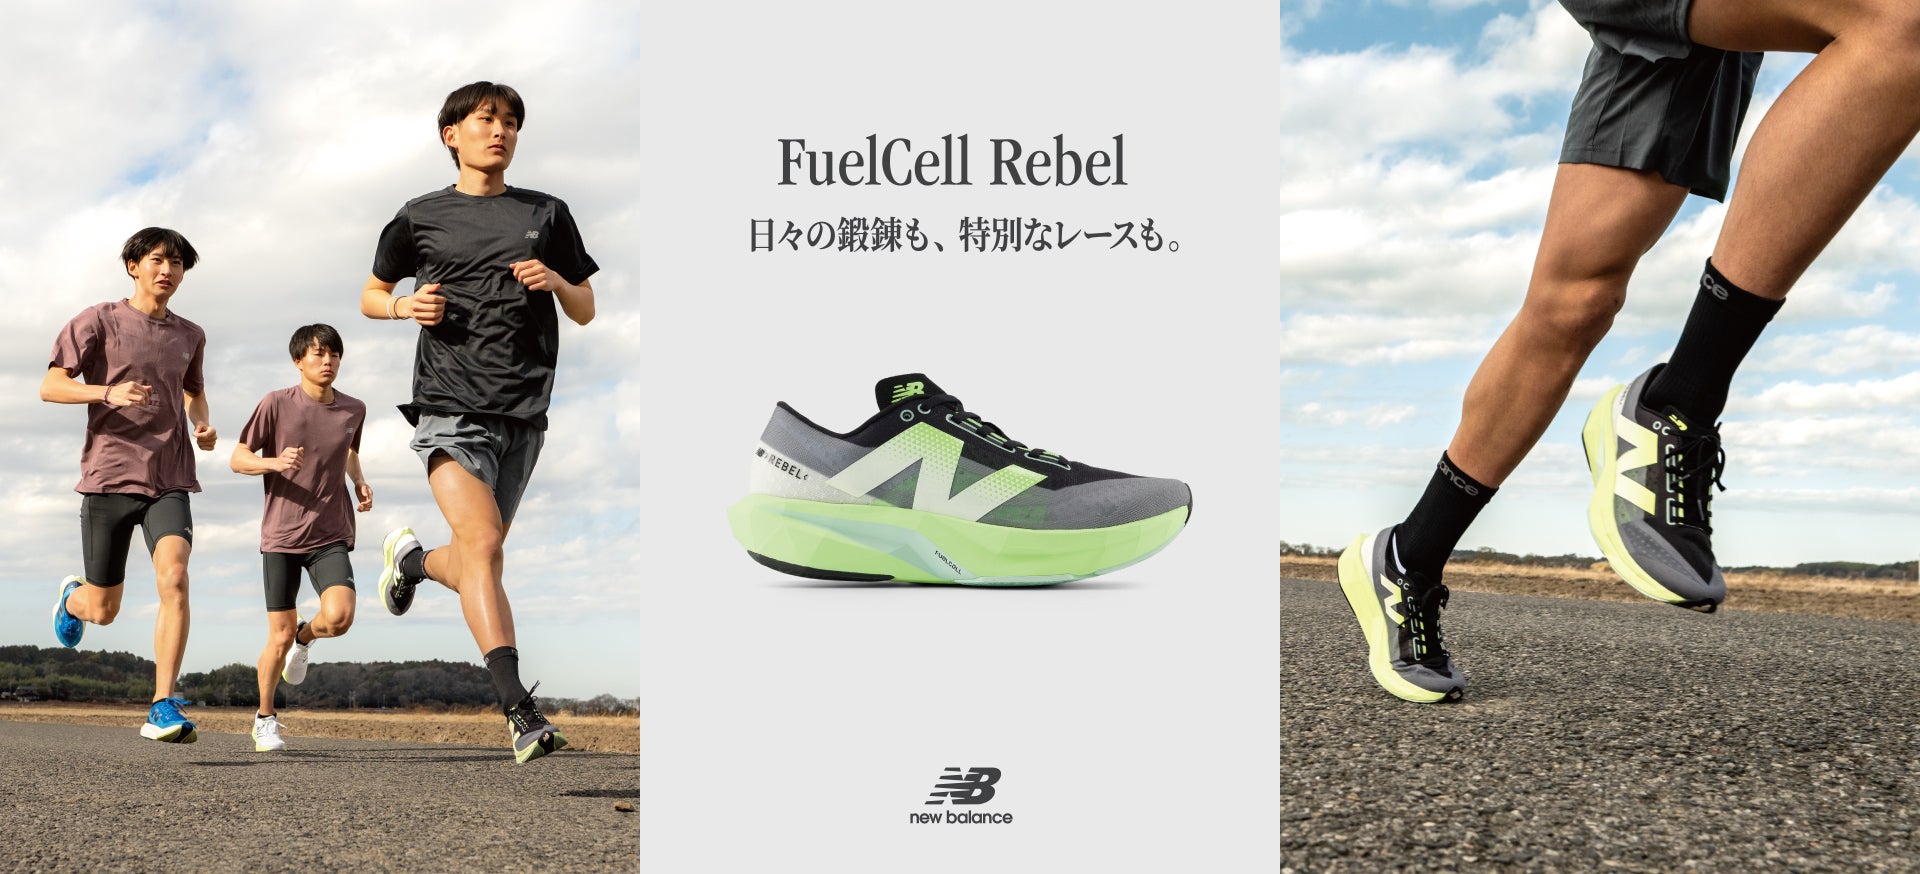 FuelCell Rebel 日々の鍛錬も、特別なレースも。